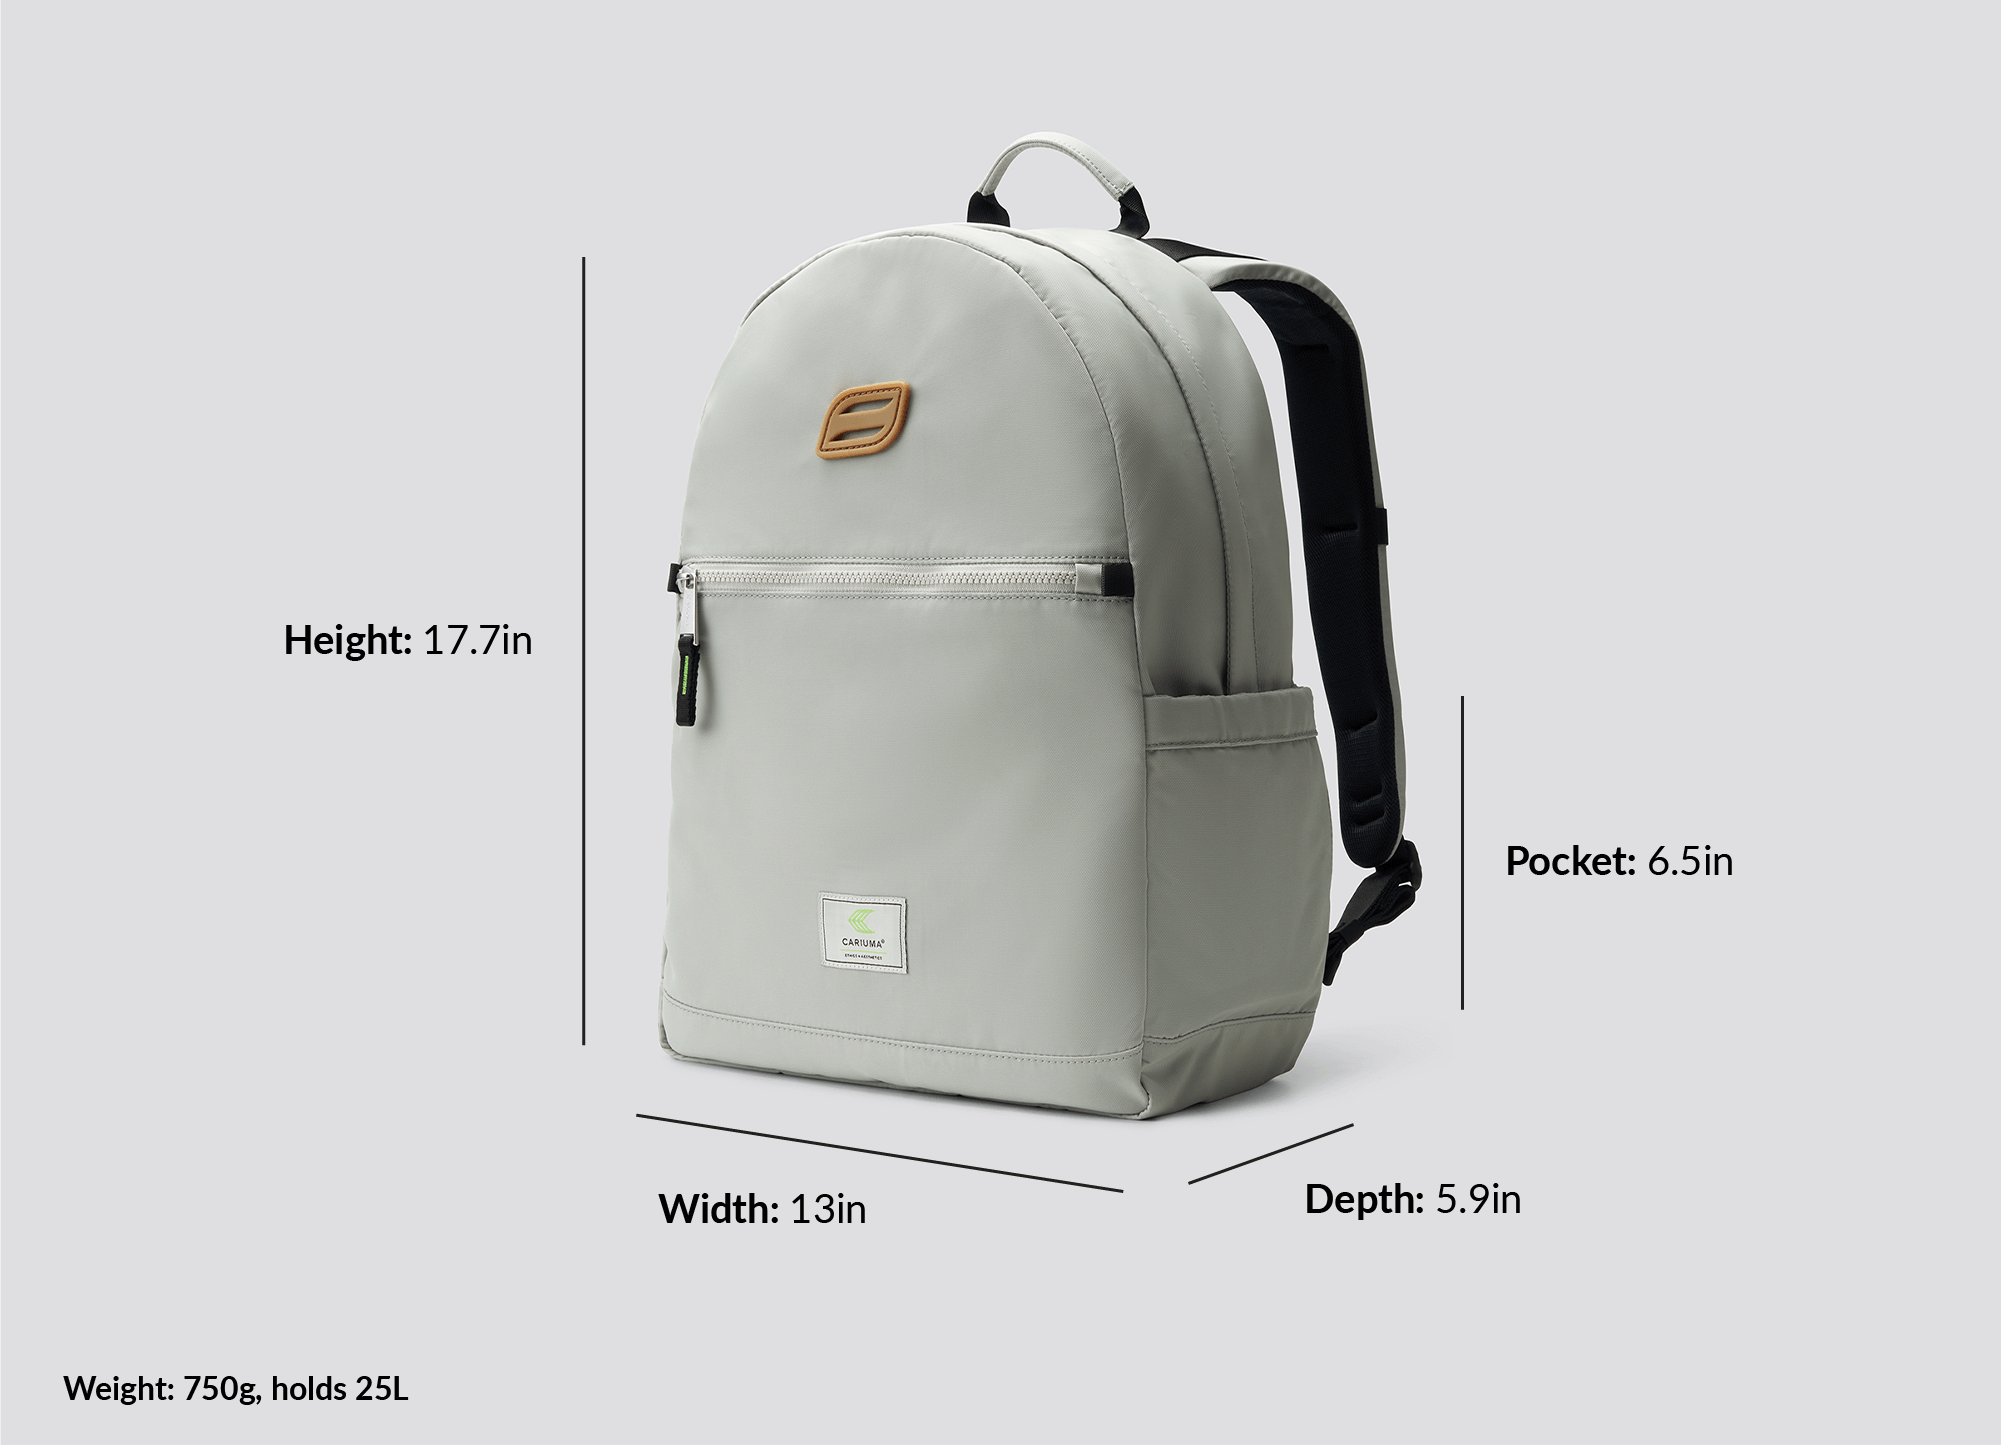 Maxpedition 9857K Zafar Internal Frame Backpack, Khaki - KnifeCenter -  Discontinued